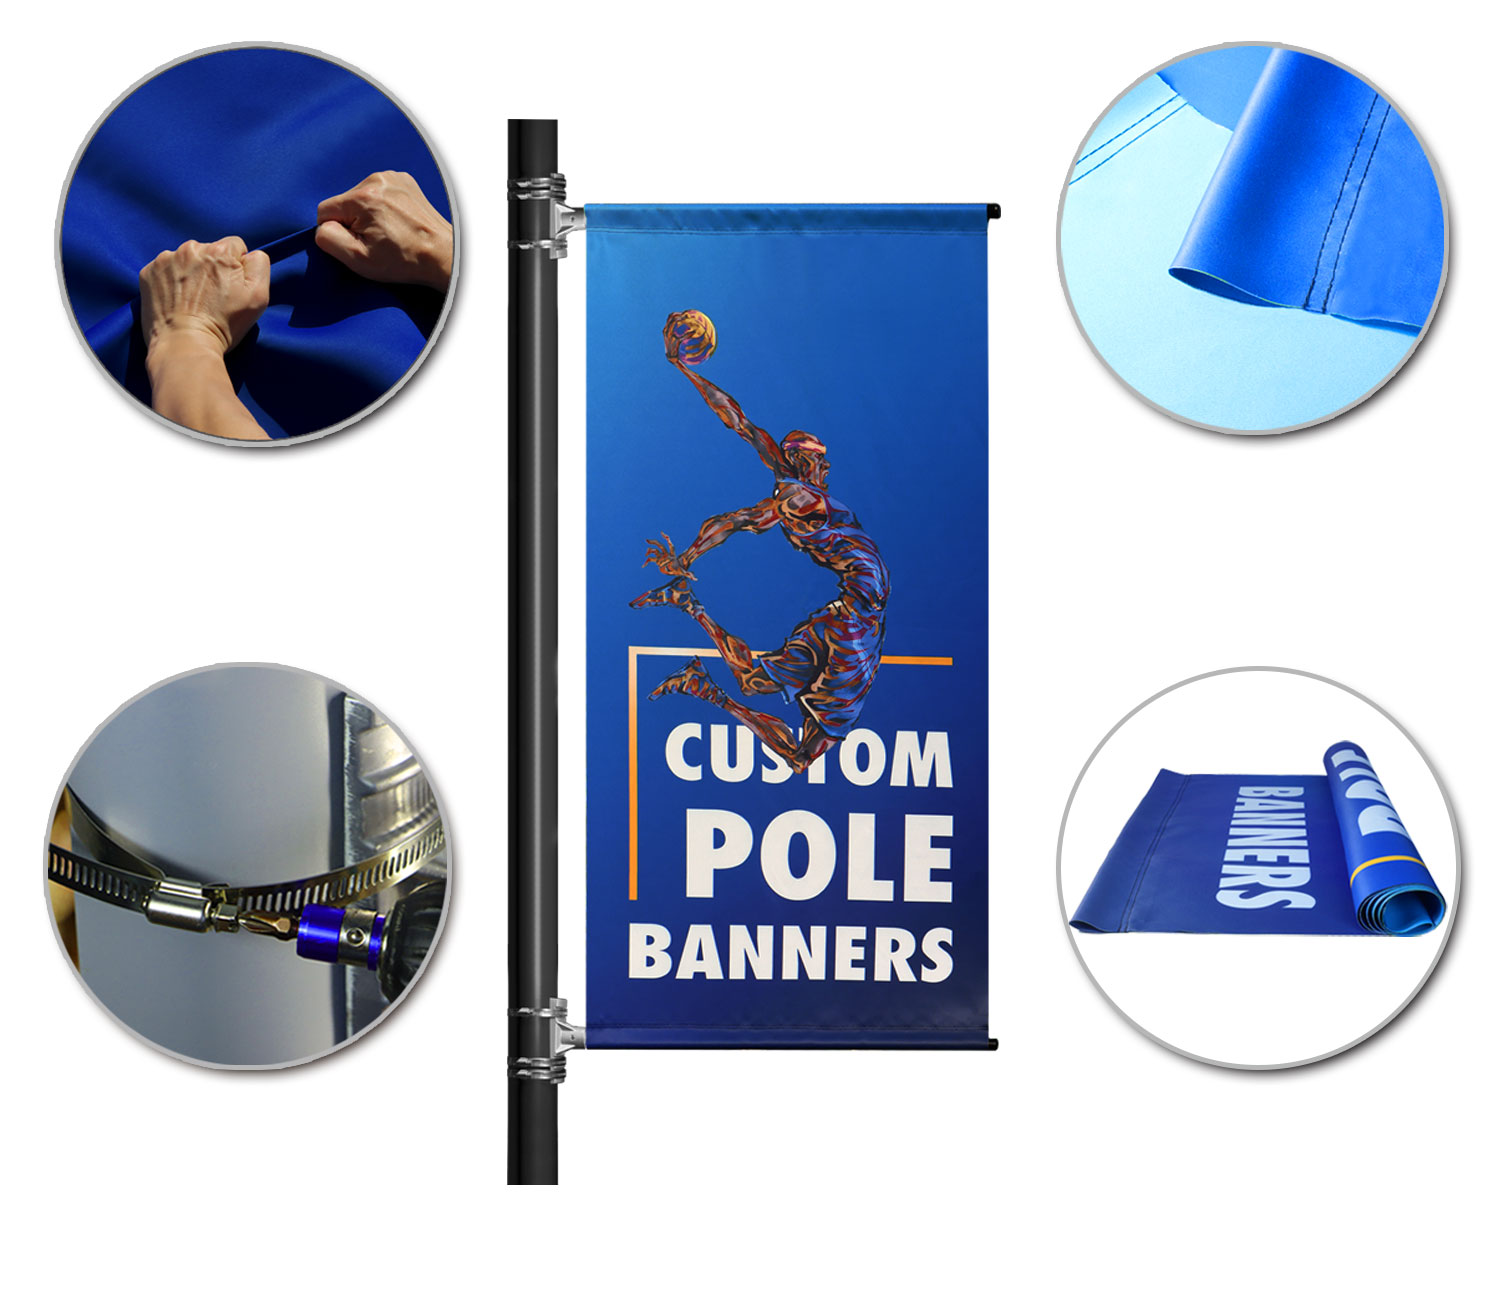 Custom Pole banners